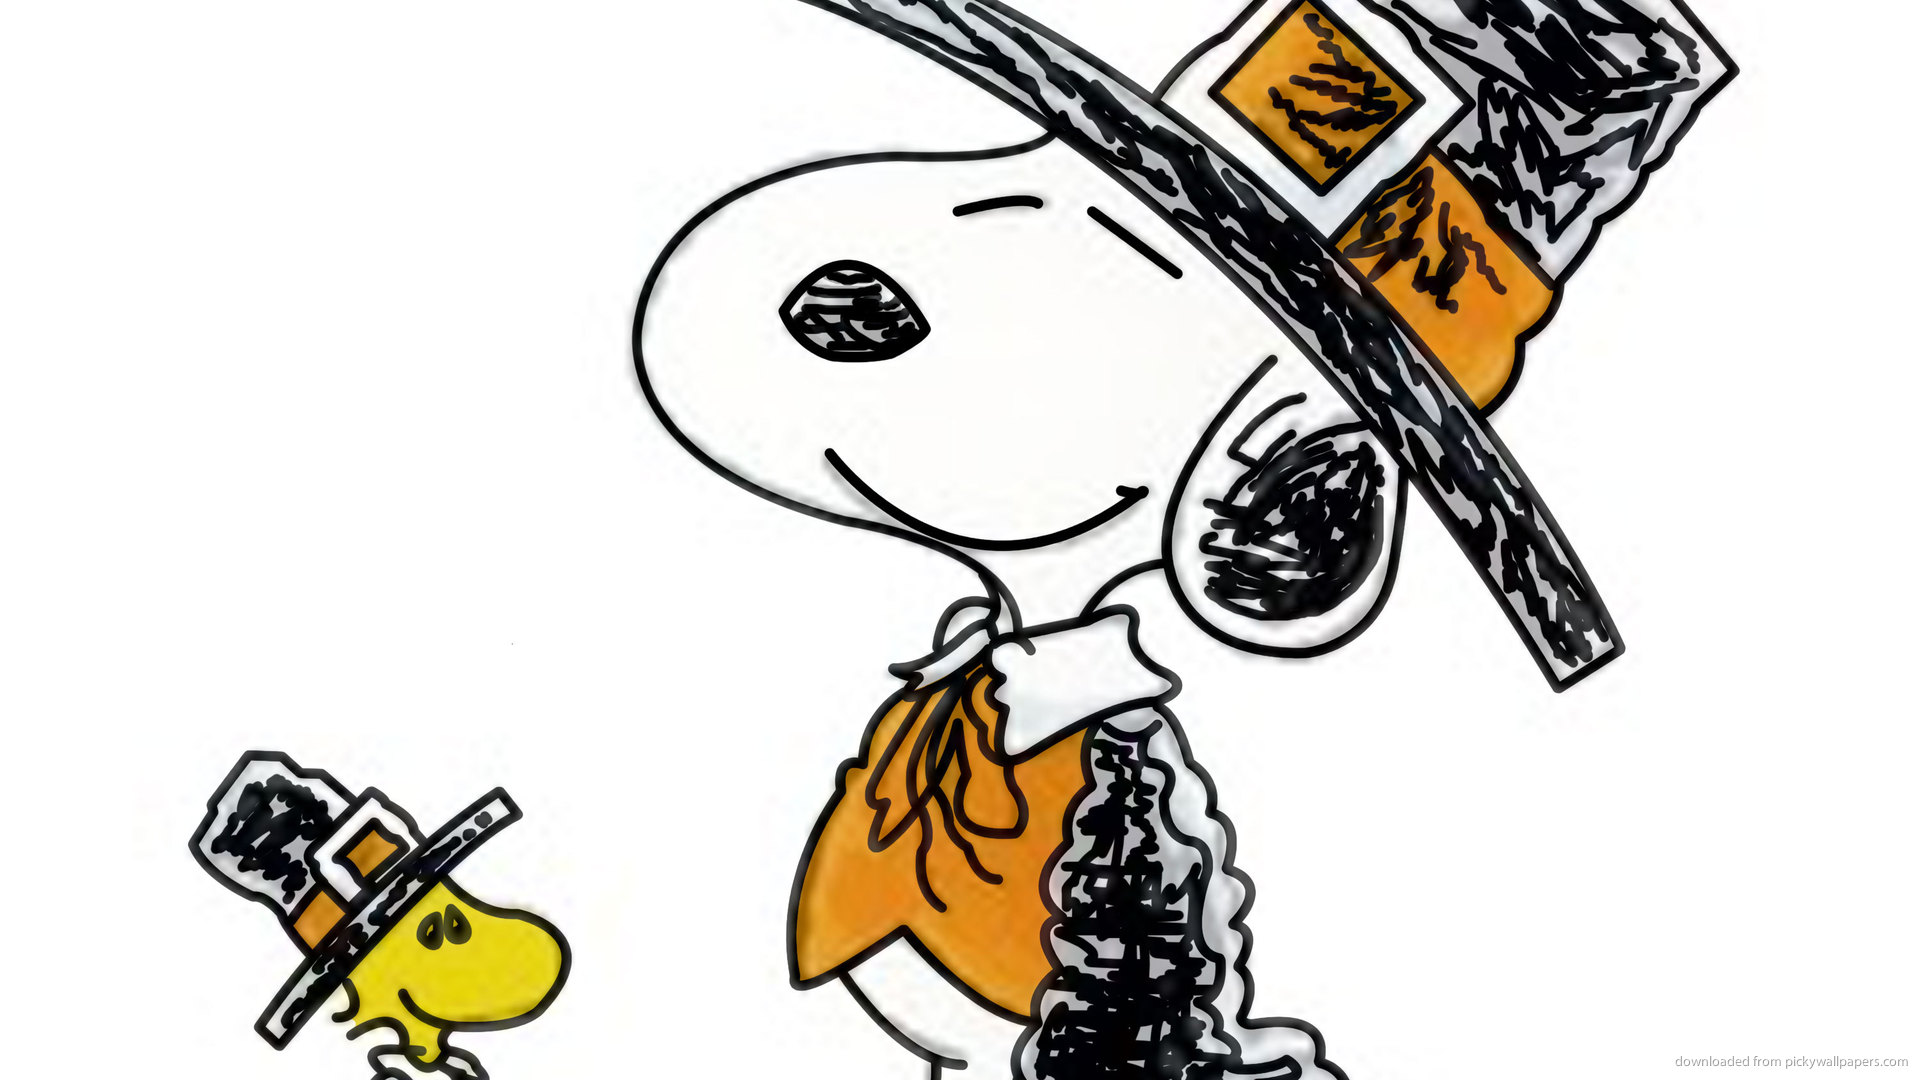 Woodstock Snoopy Image For Desktop Background